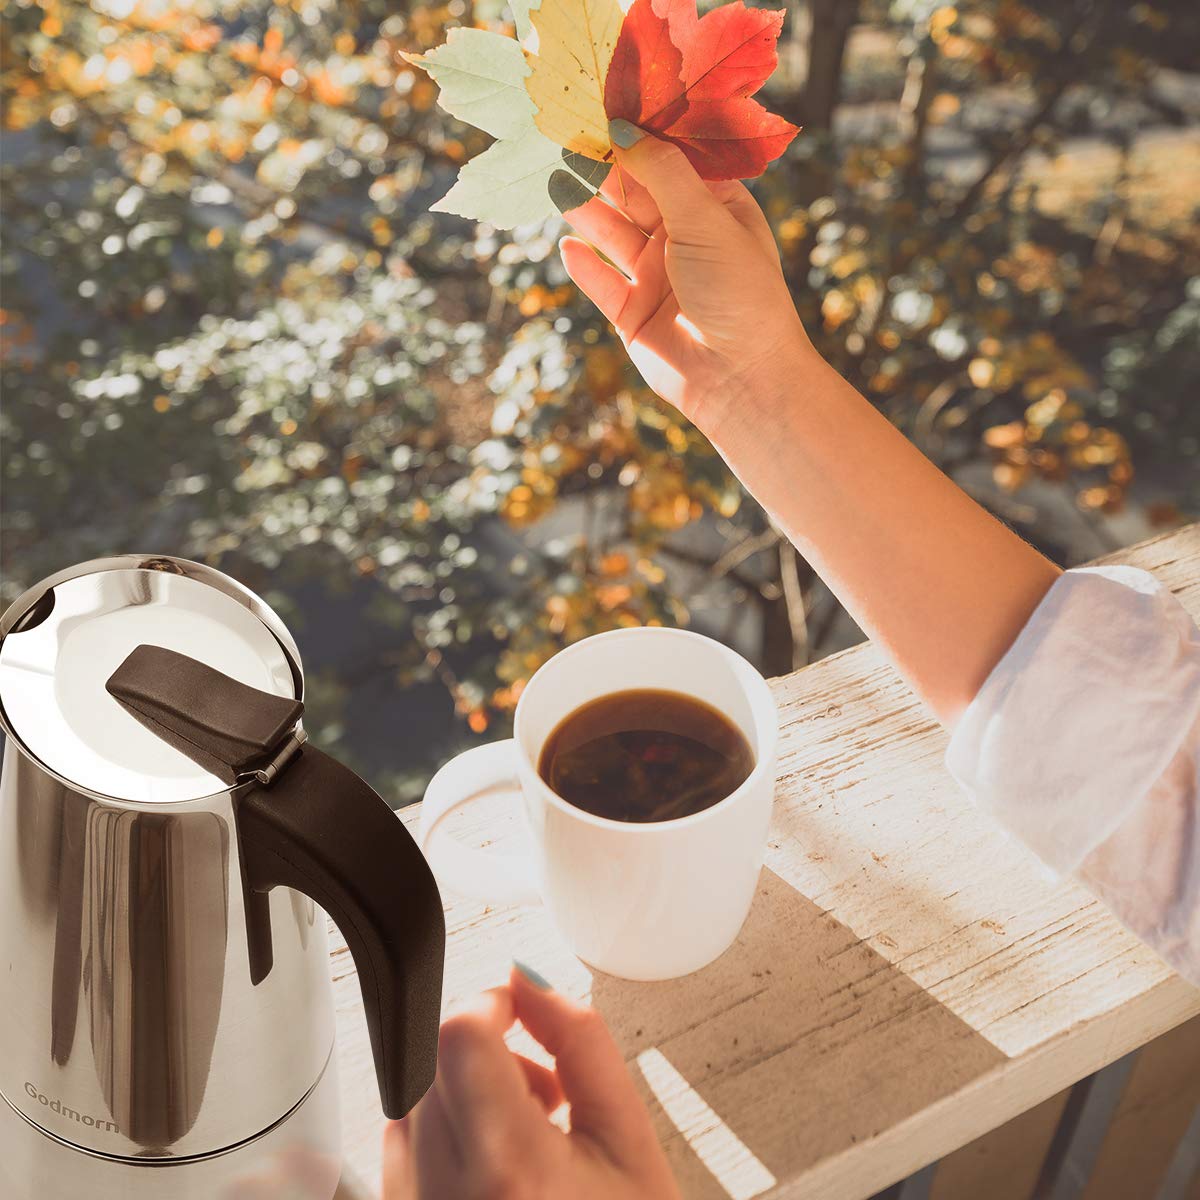 Godmorn-Stovetop-Espresso-Maker-Moka-Pot-450ml15oz9-cup-Classic-Cafe-Percolator-Maker-Stainless-Stee-1736605-7